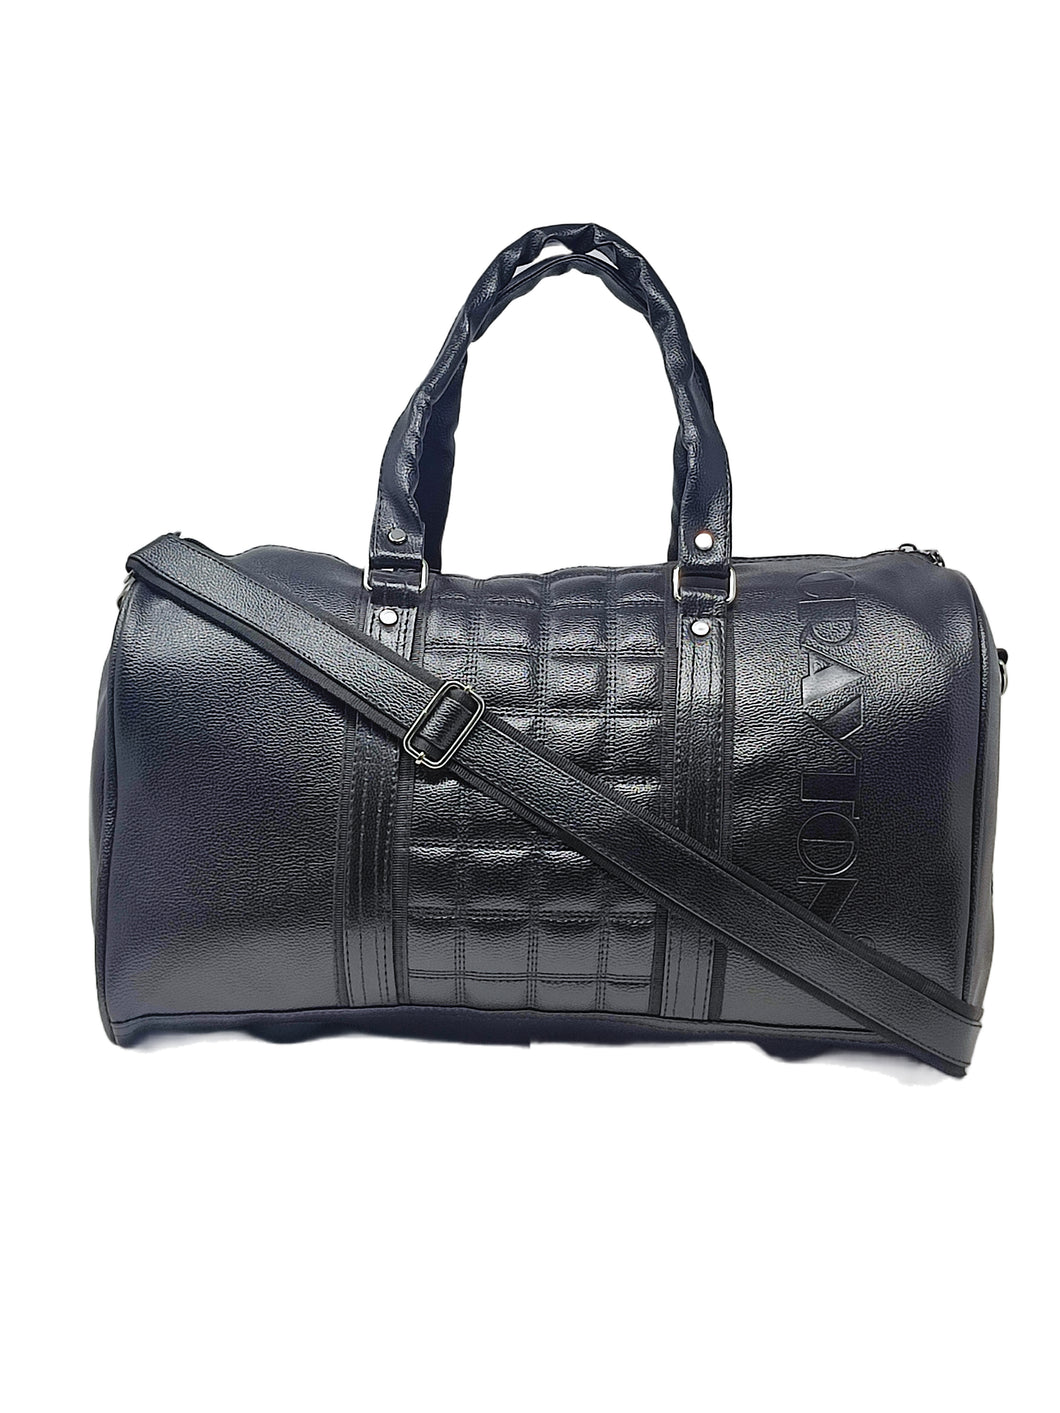 Crayton PU Leather Black Duffel Bag for Men and Women